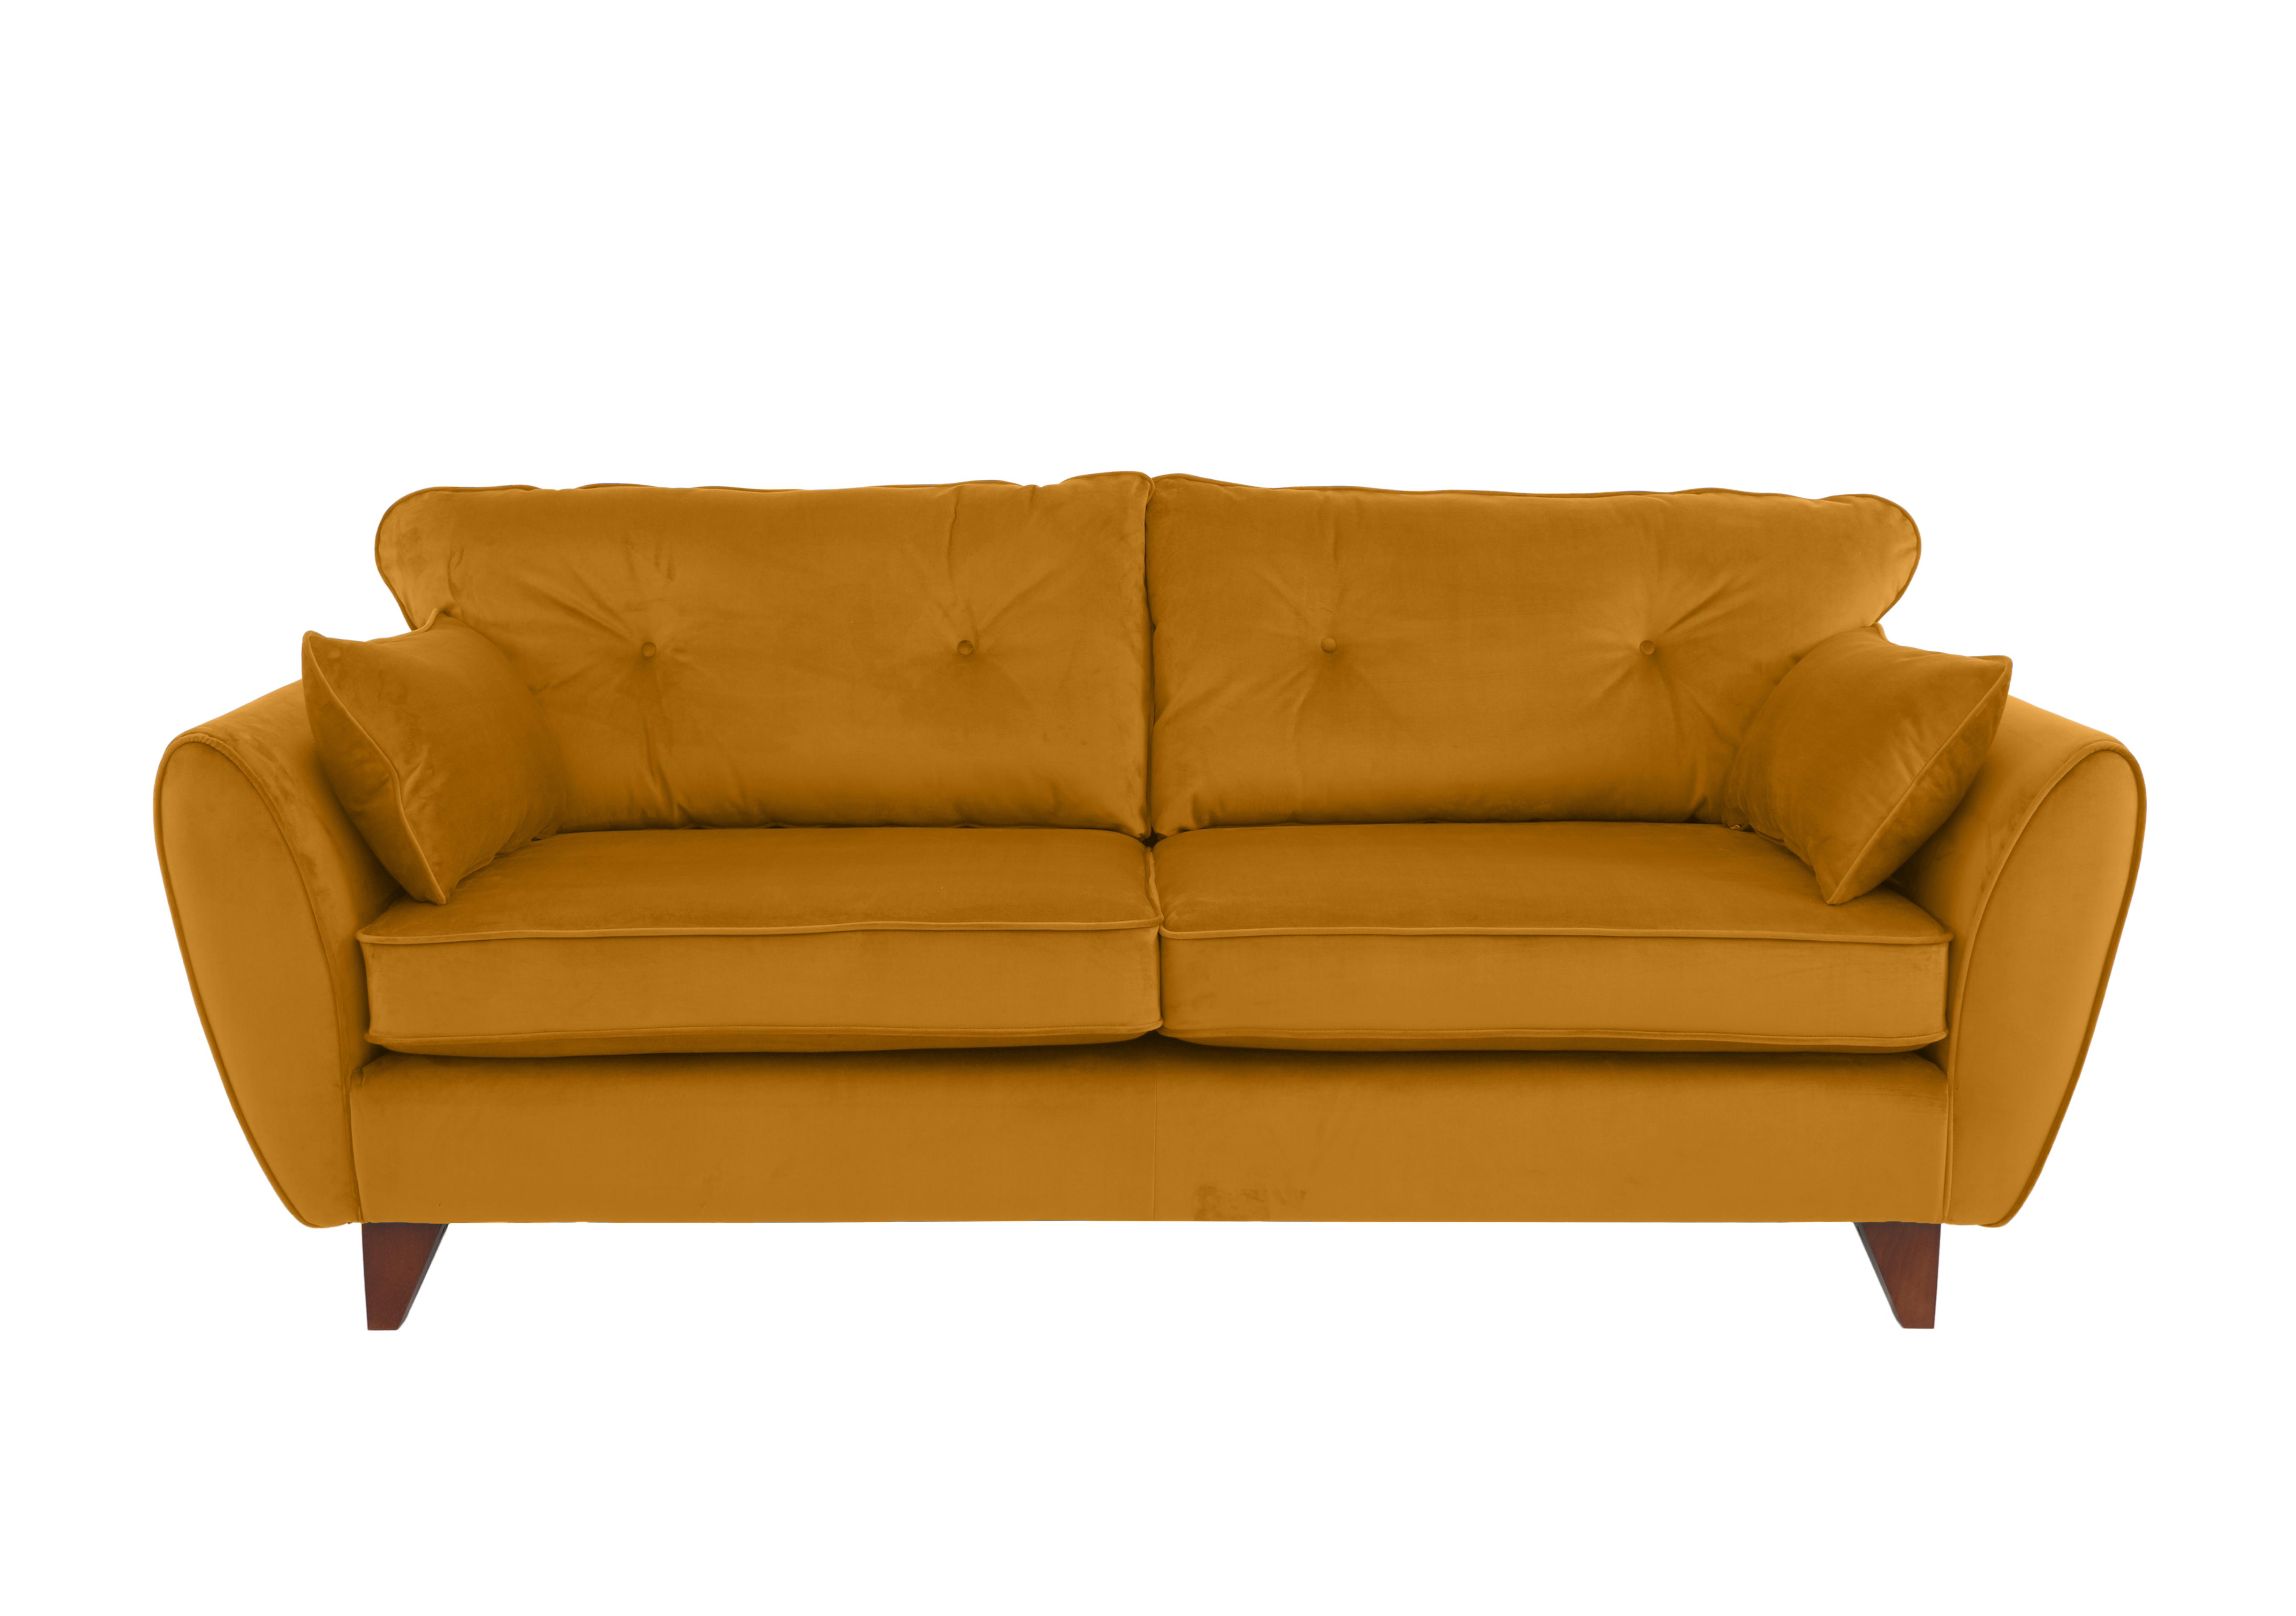 Felix 4 Seater Fabric Sofa in Mustard on Furniture Village